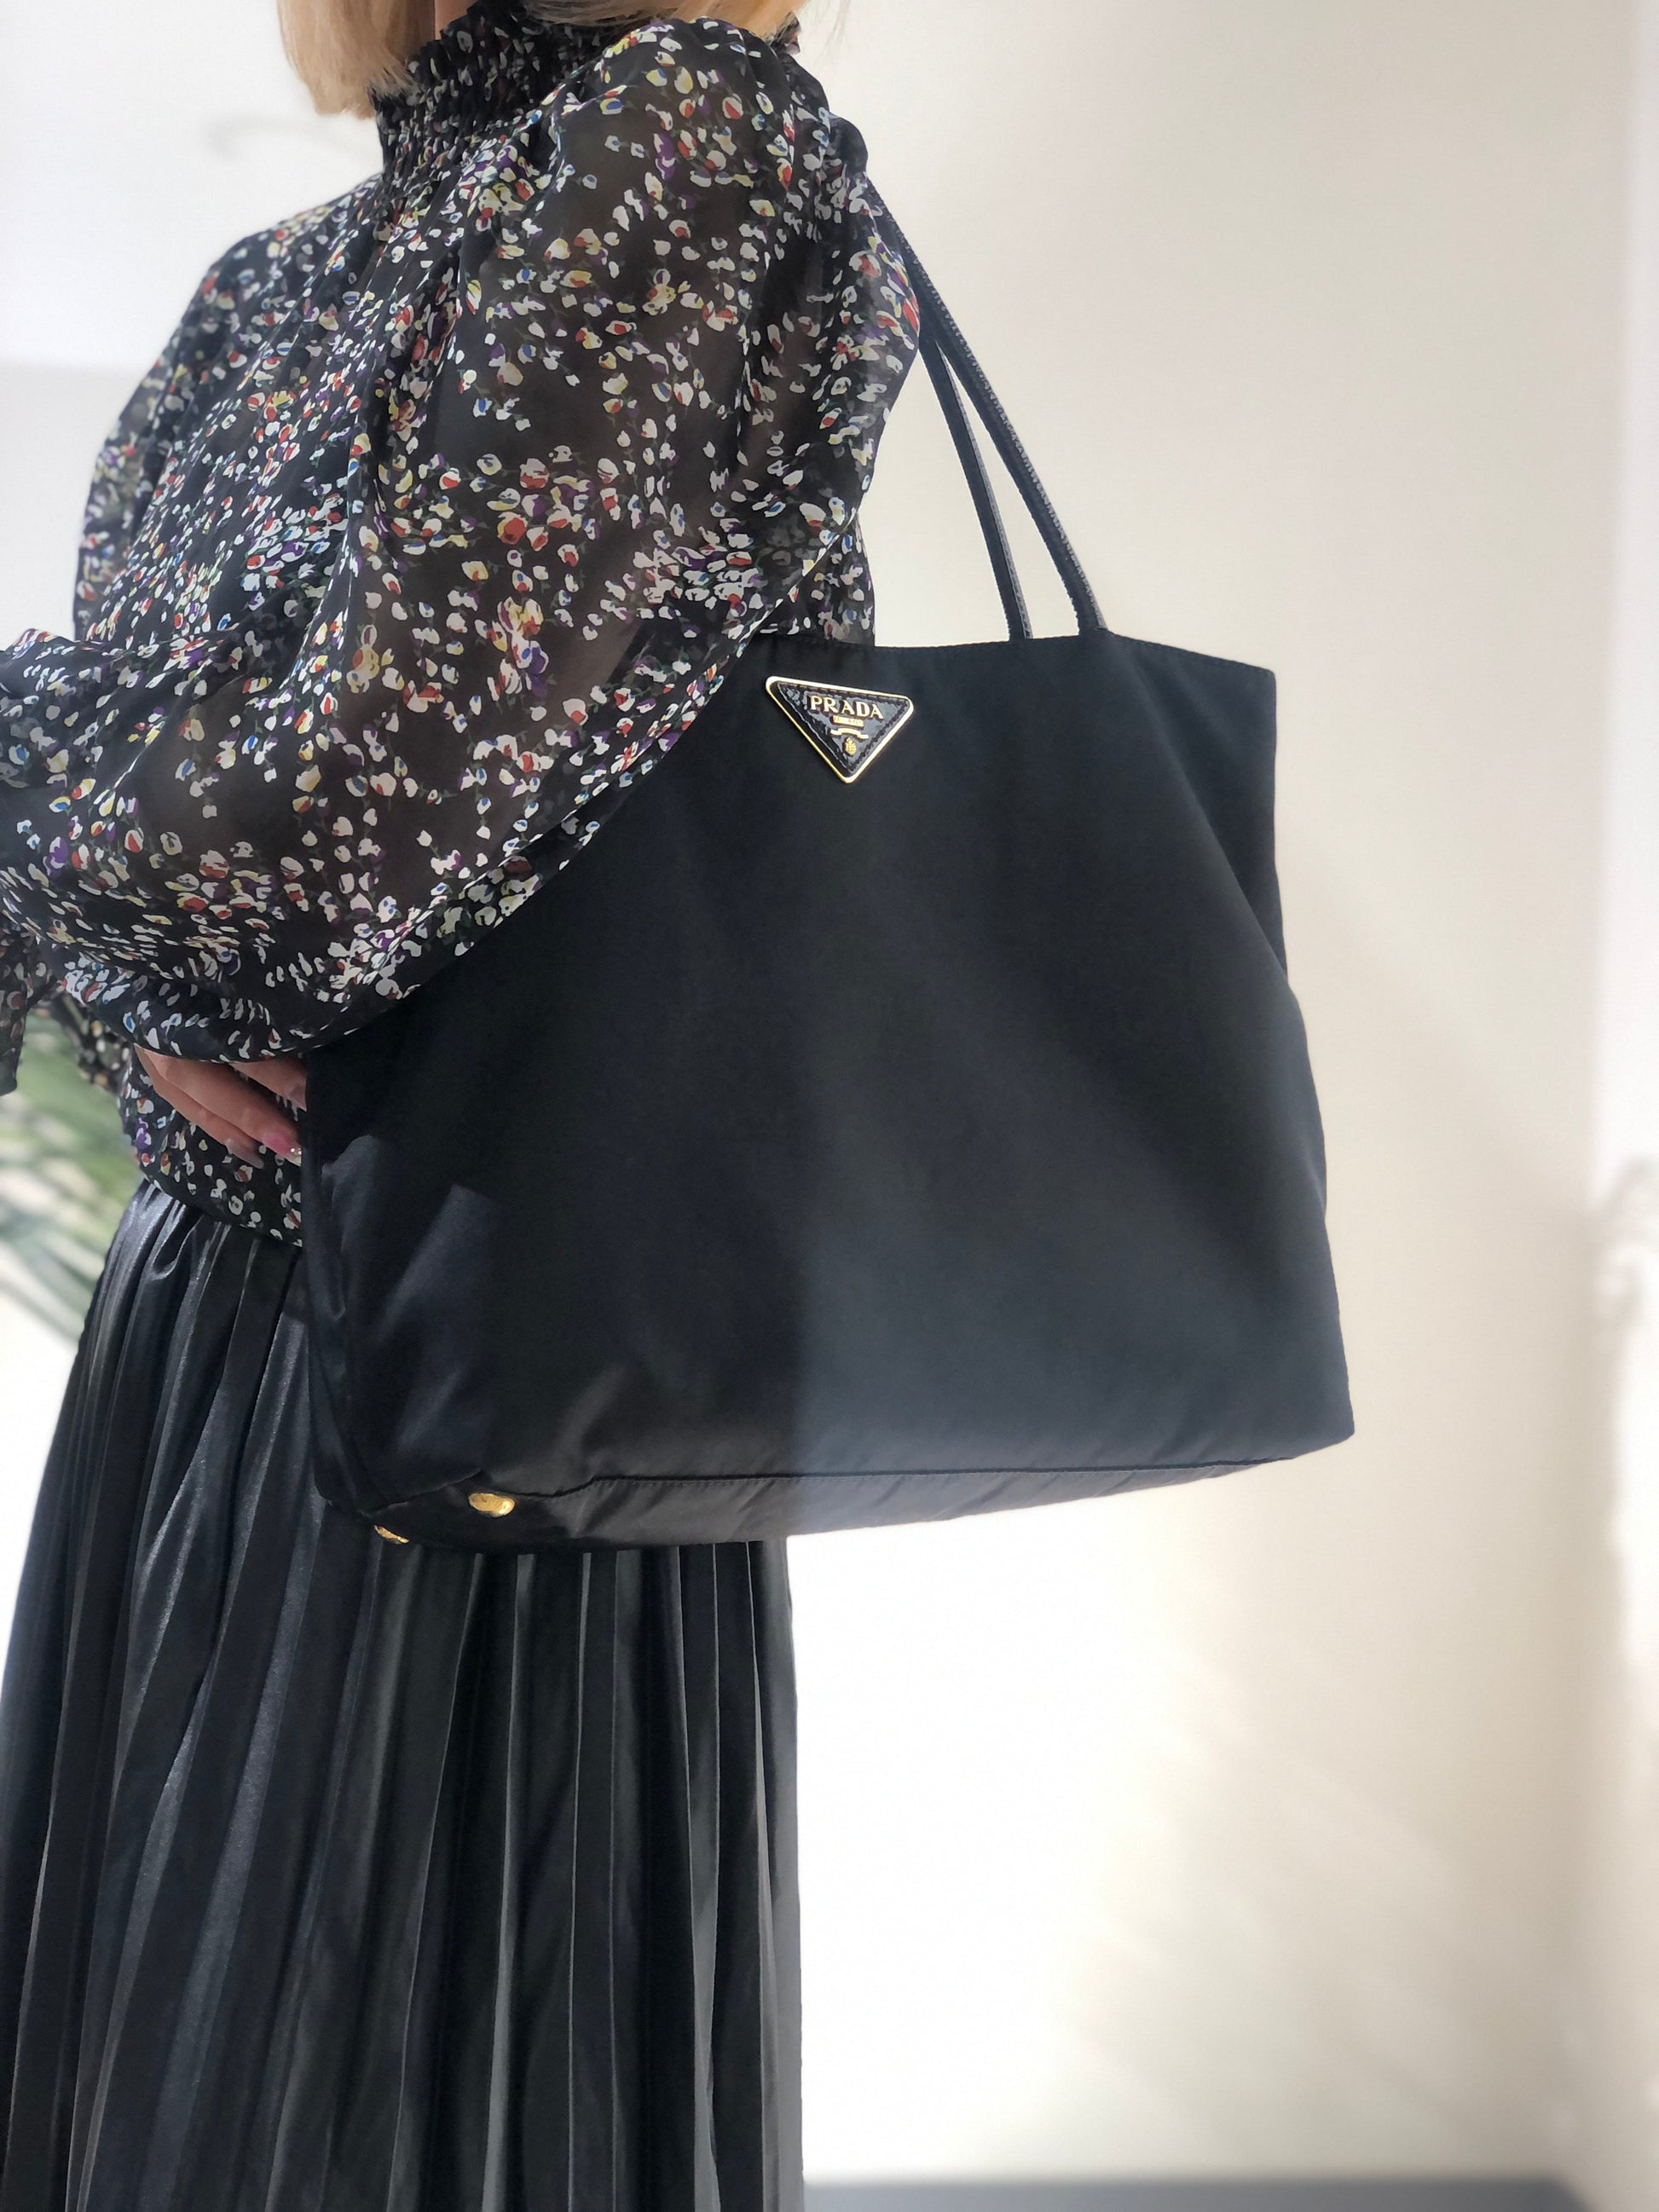 Prada Tessuto Nylon Tote Bag in Classic Black